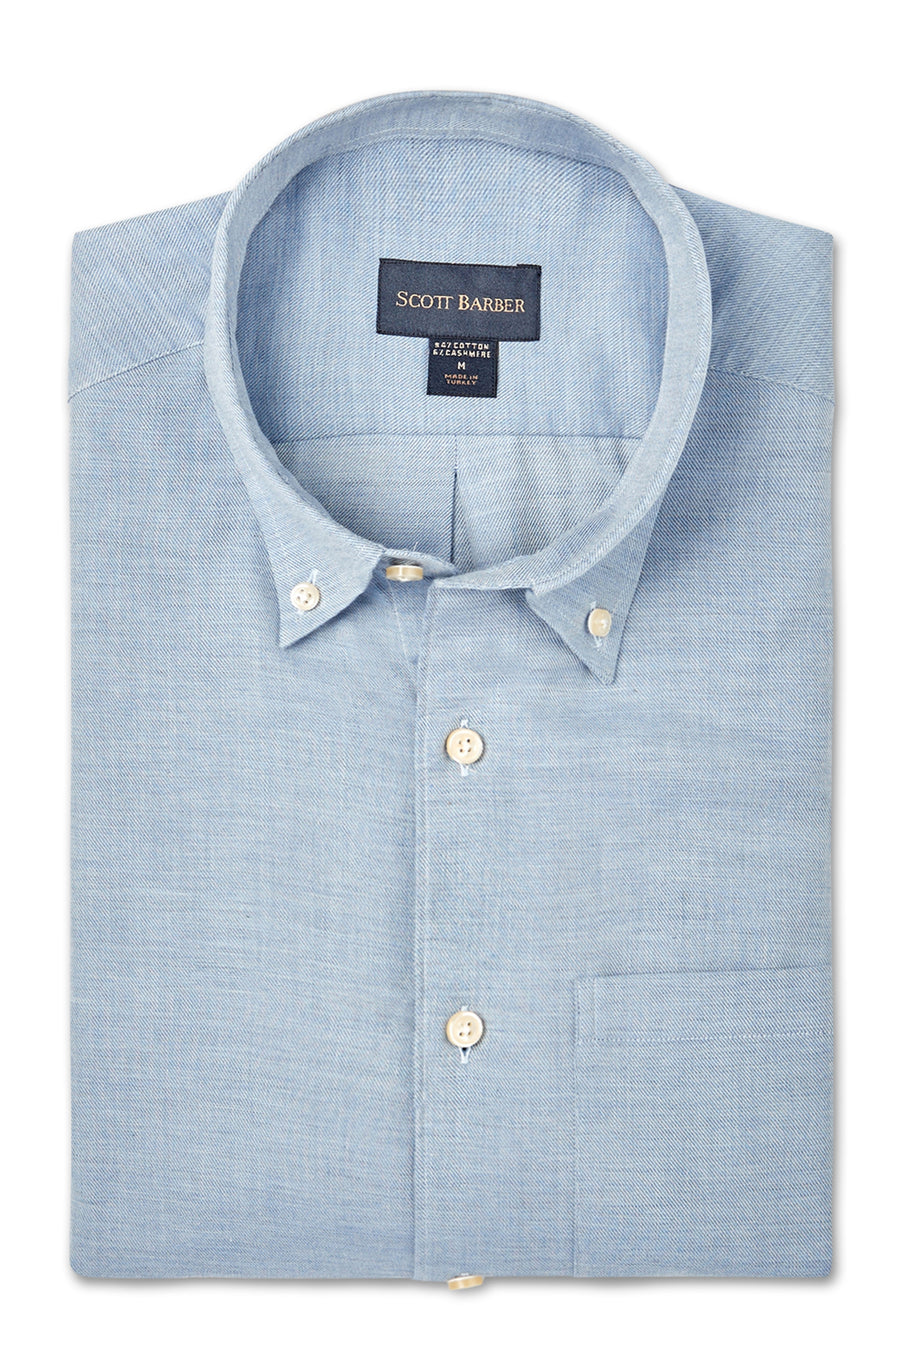 Cotton/Cashmere Solid Twill, Blue - Scott Barber